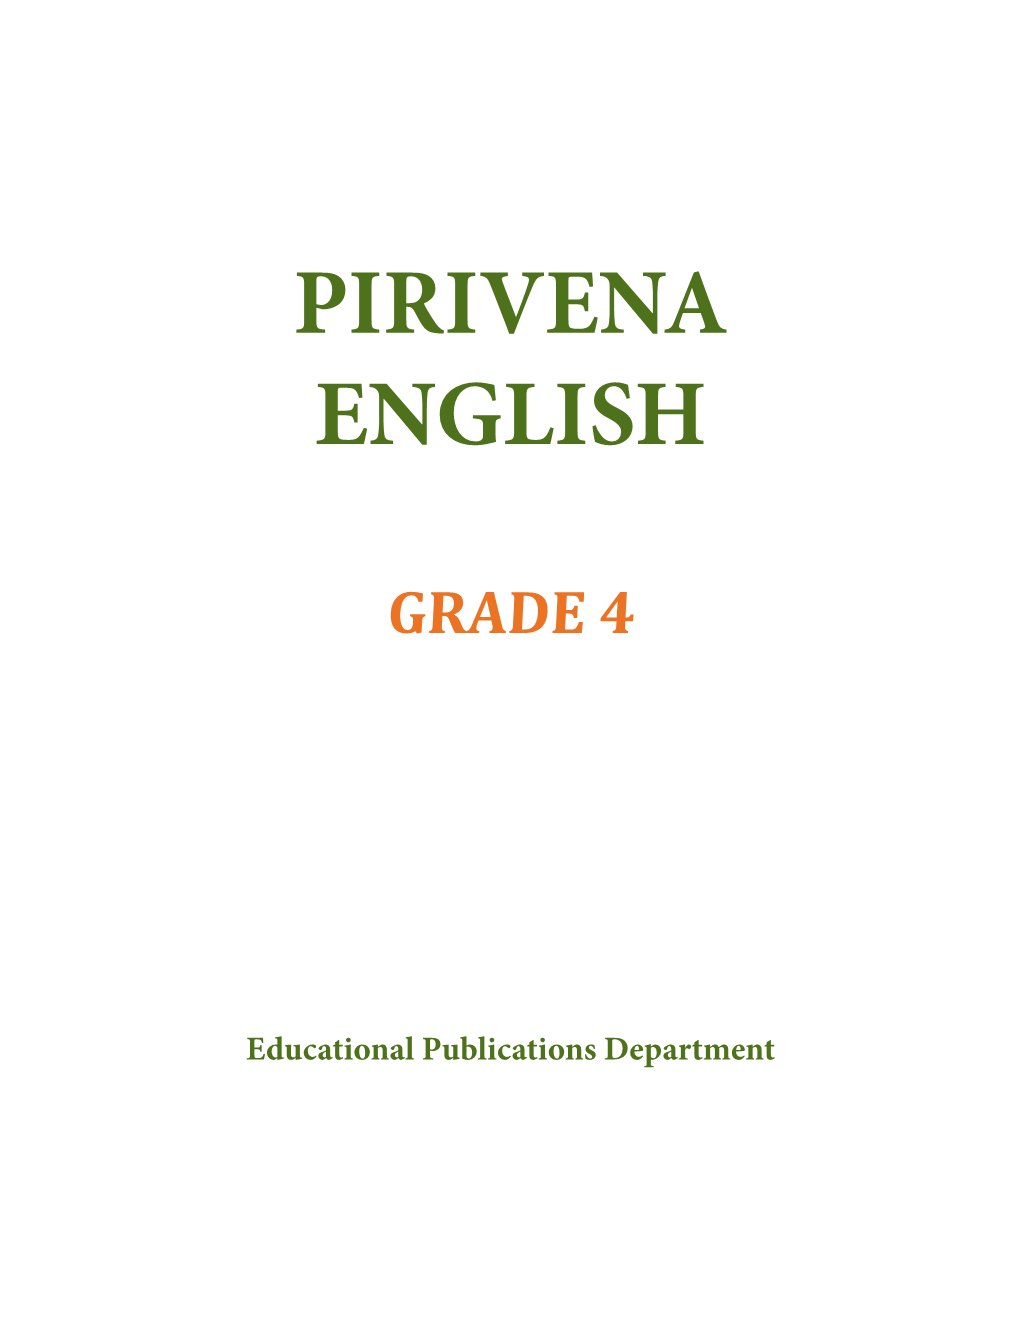 Pirivena English